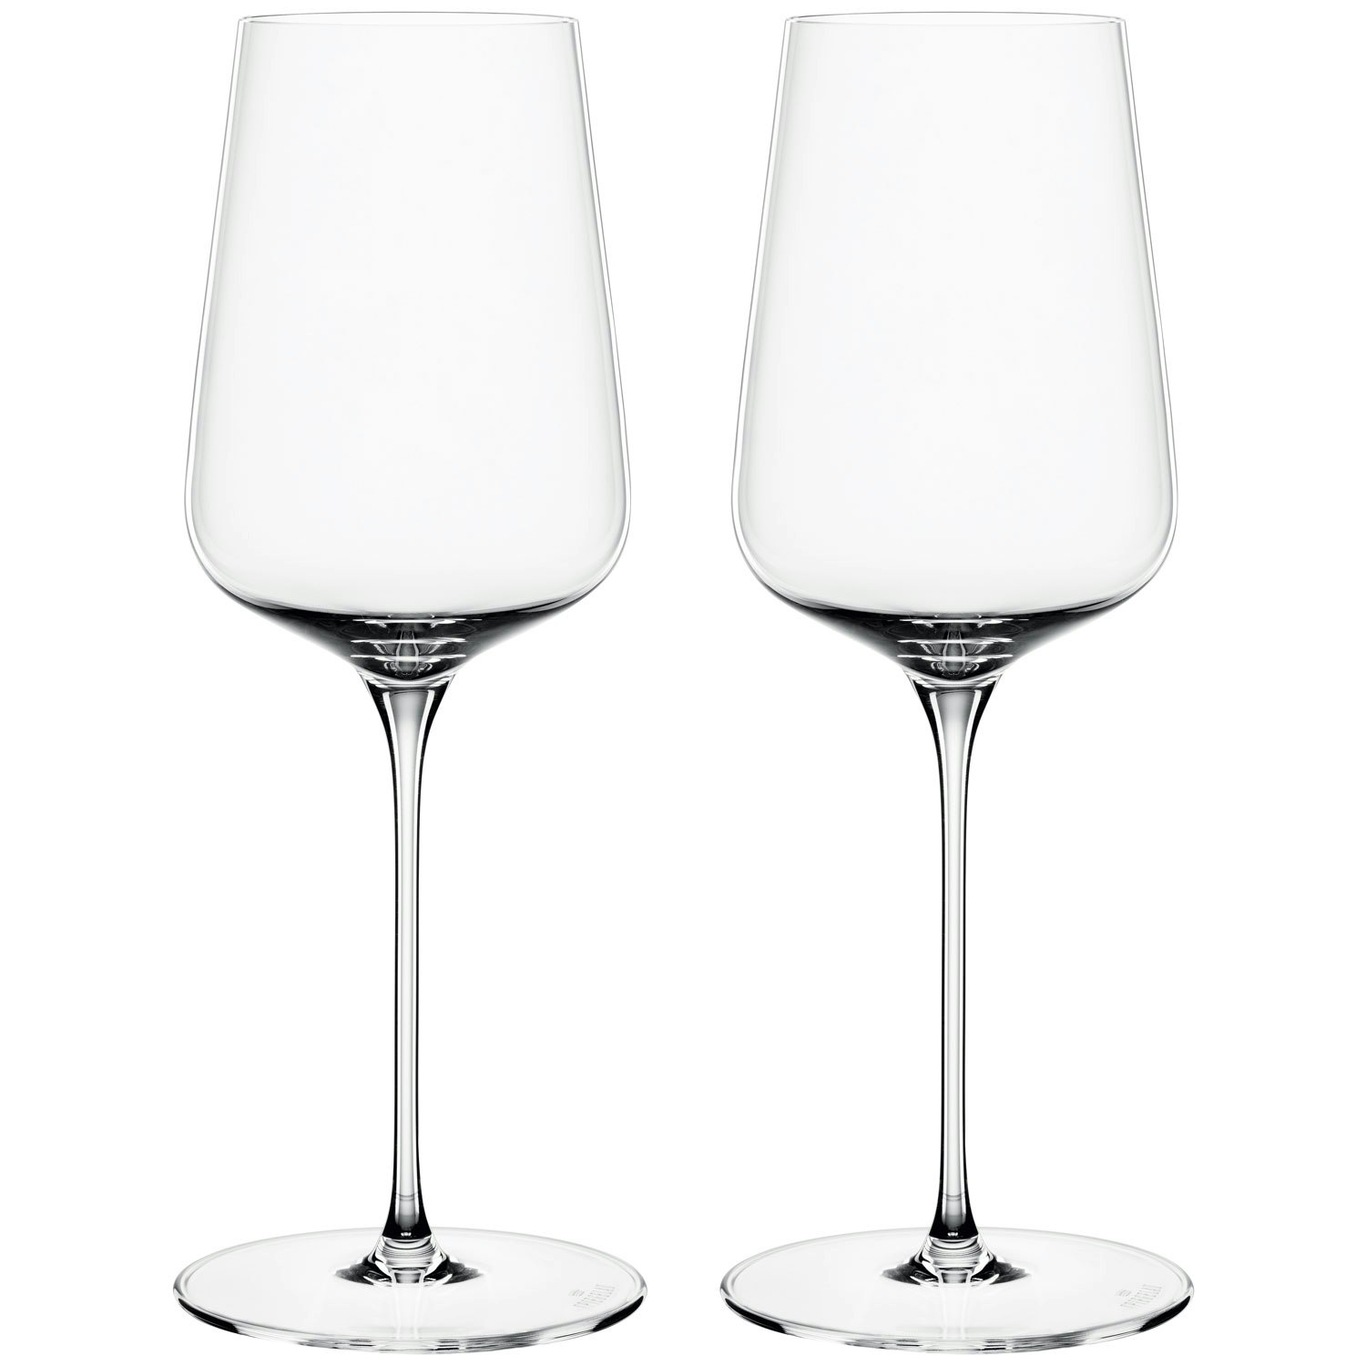 https://royaldesign.com/image/2/spiegelau-definition-white-wine-glass-43-cl-2-pack-0?w=800&quality=80